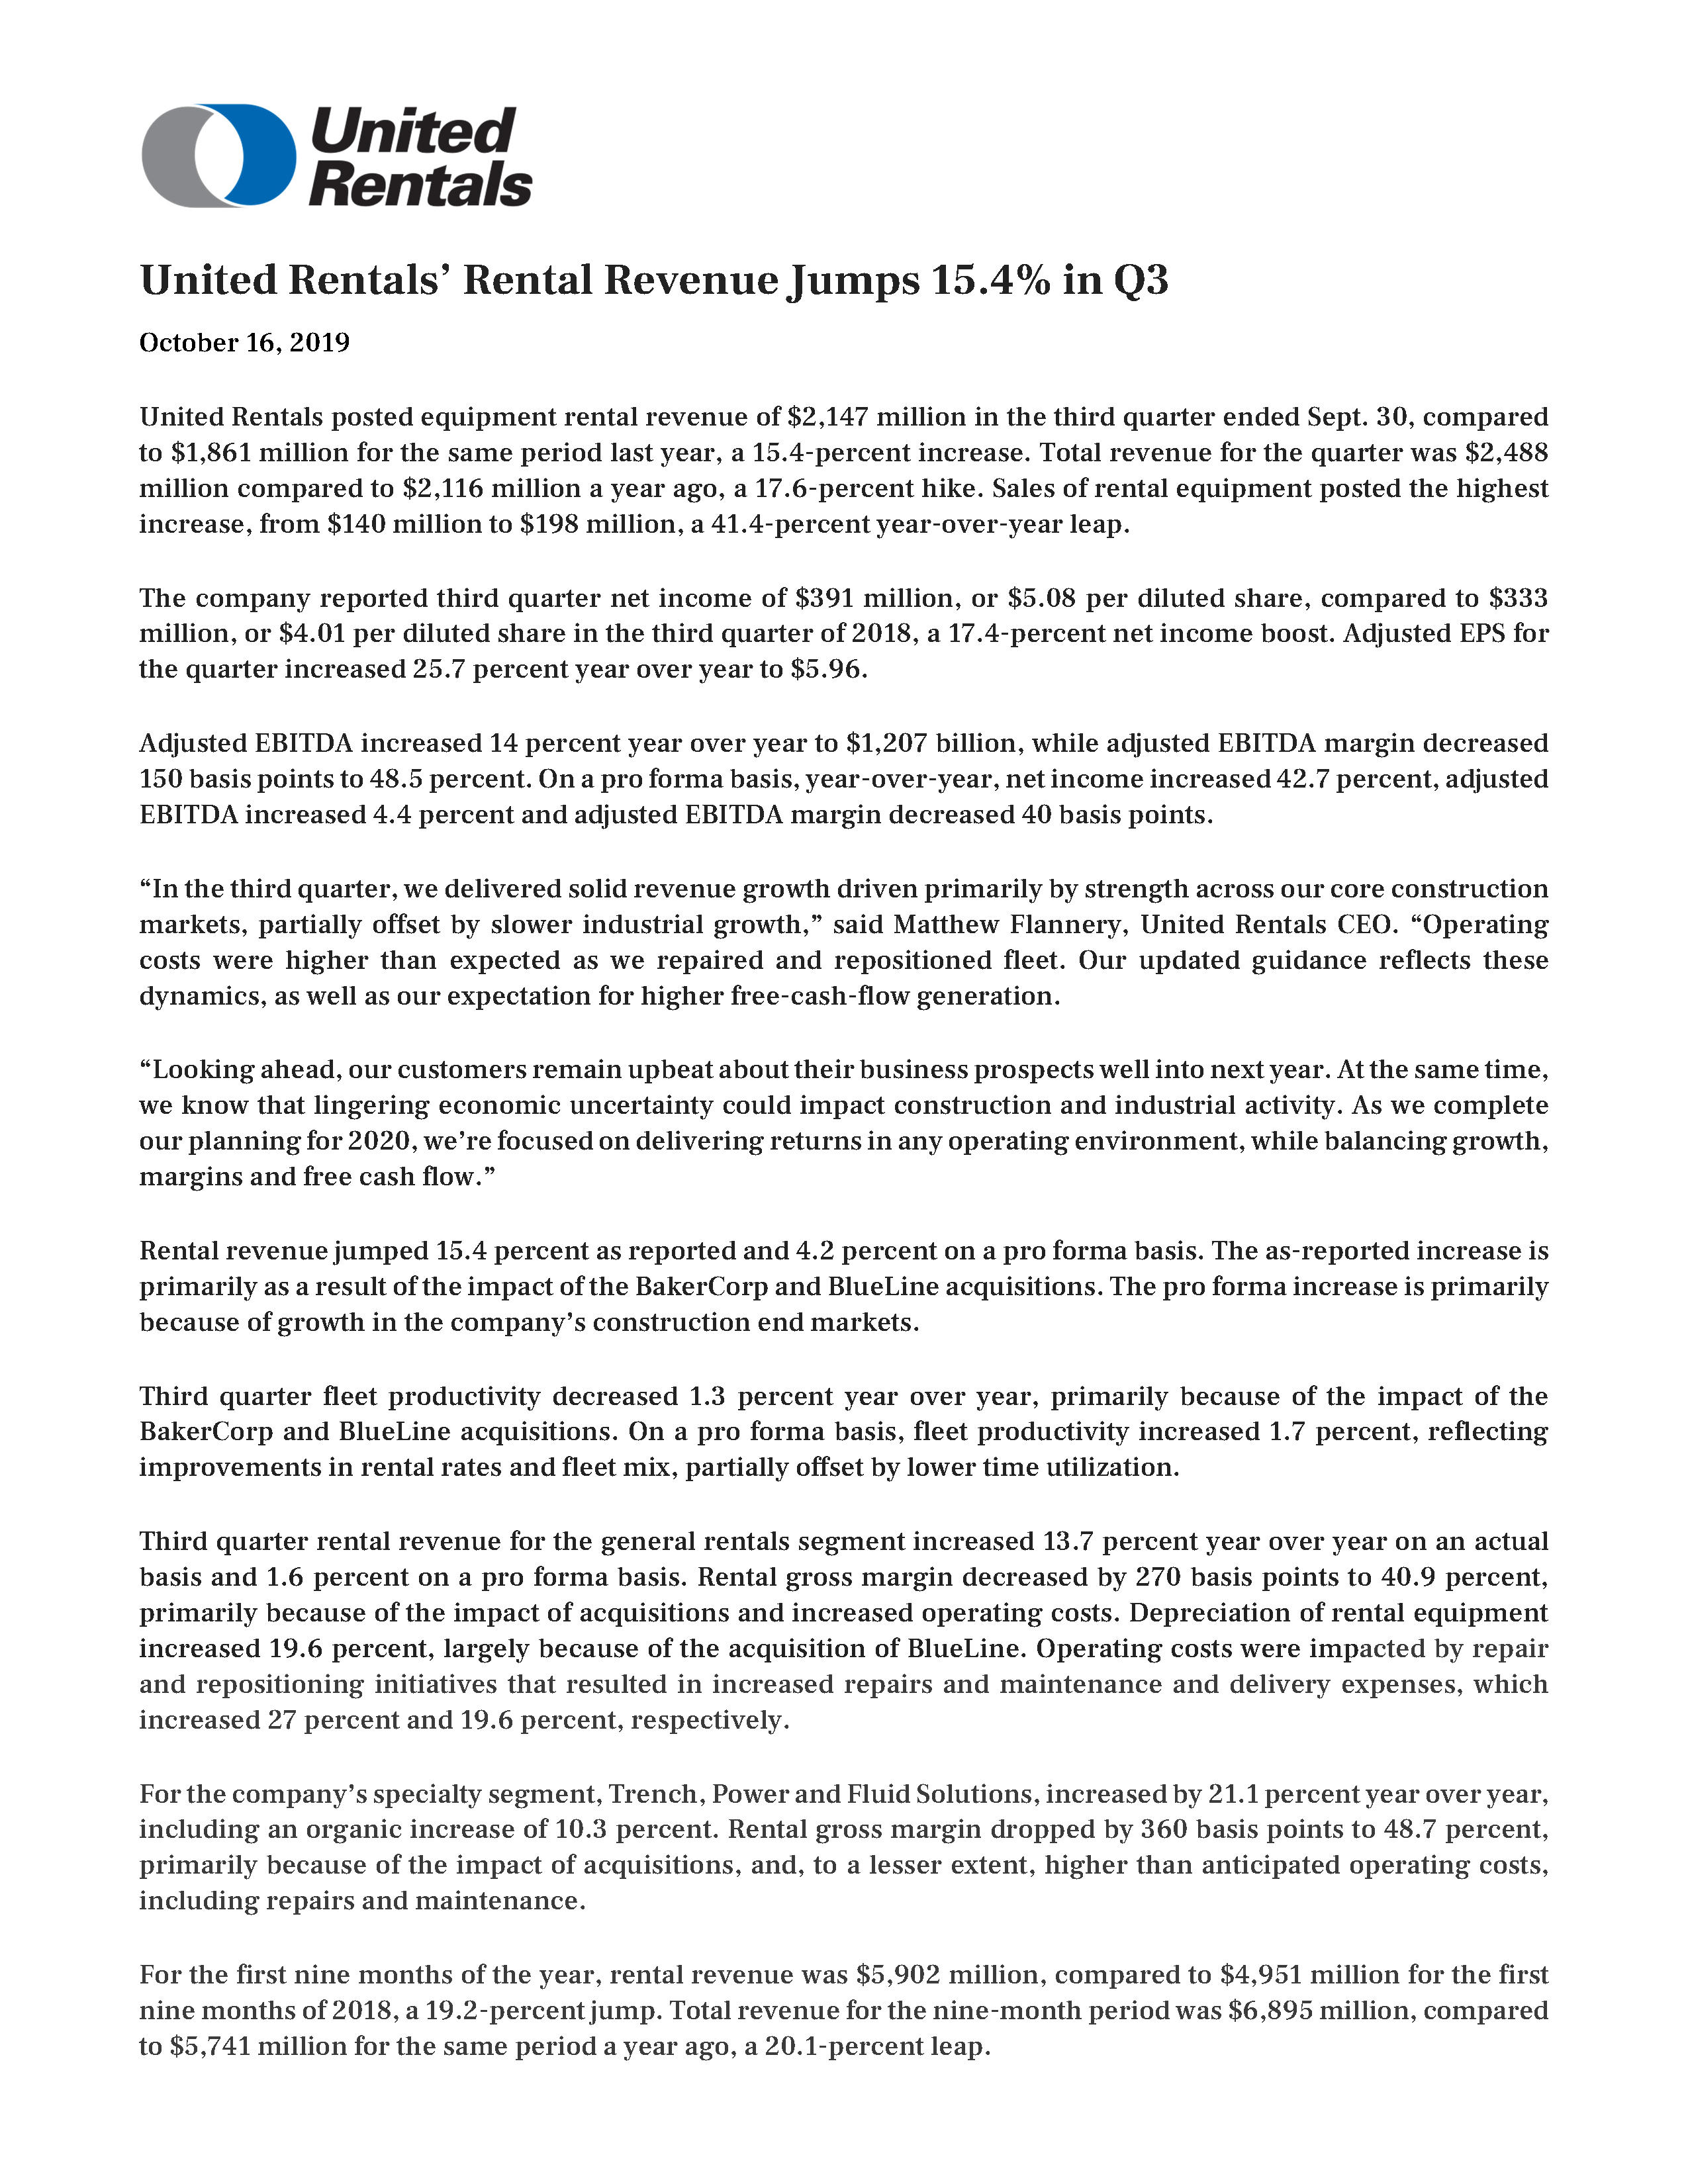 United Rentals' Rental Revenue Jumps 15.4% in Q3 10.16.2019_Page_1